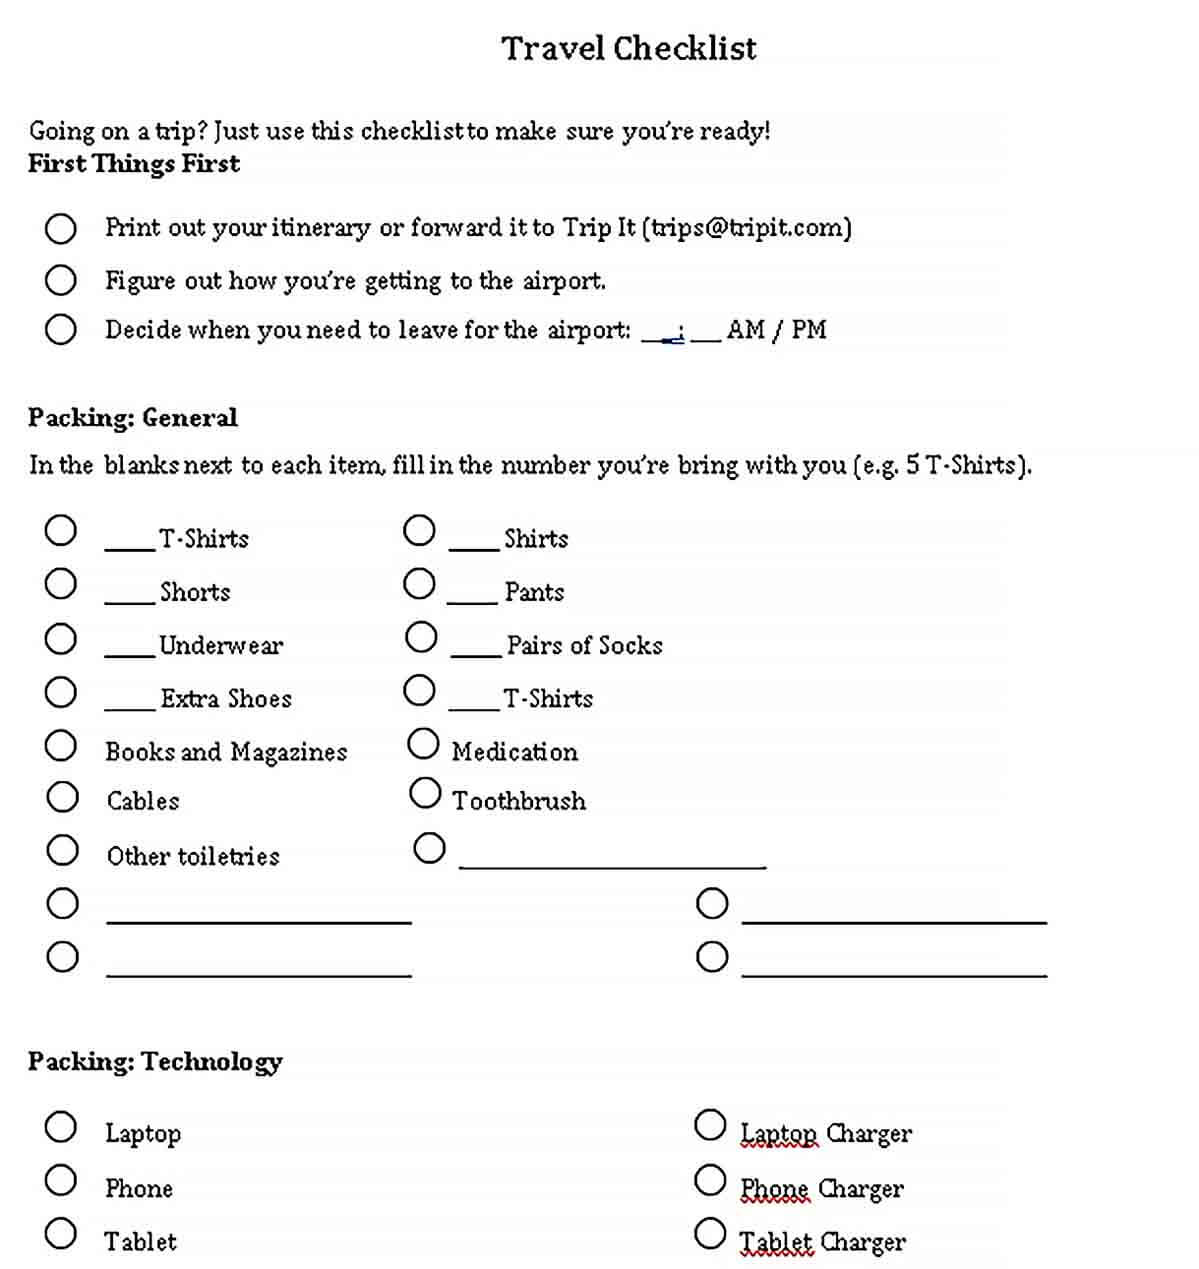 Sample Travel Checklist